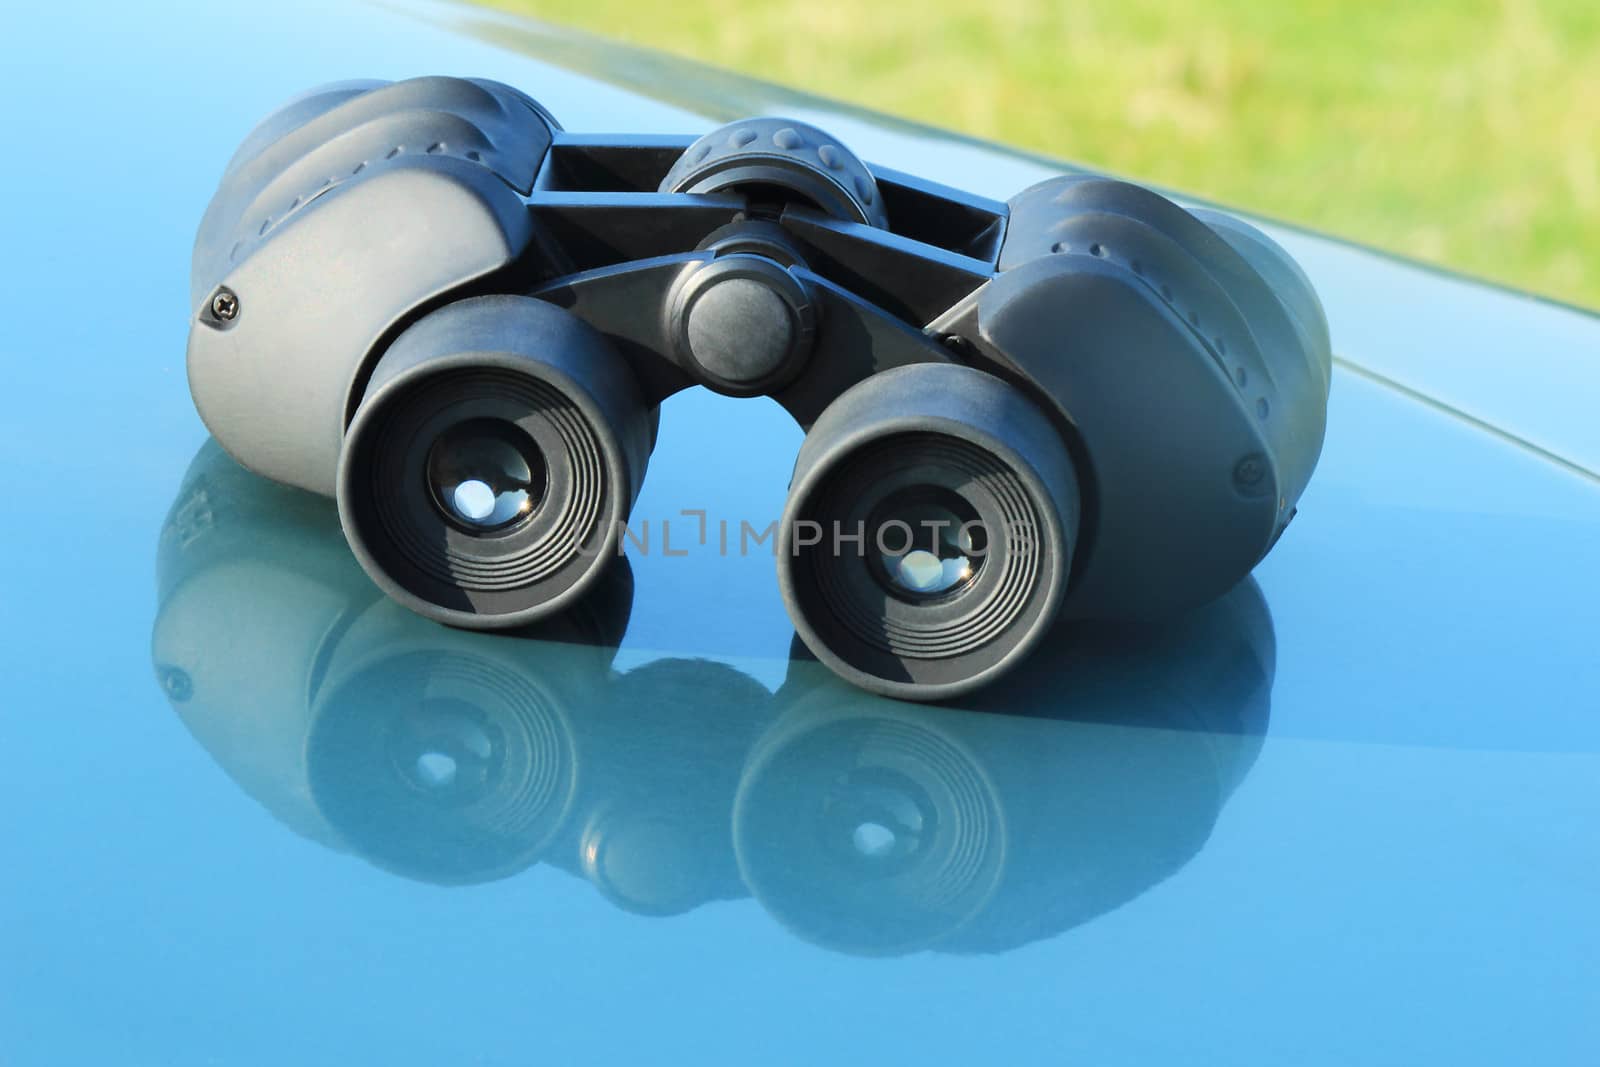 Binoculars lying on the car hood. by georgina198